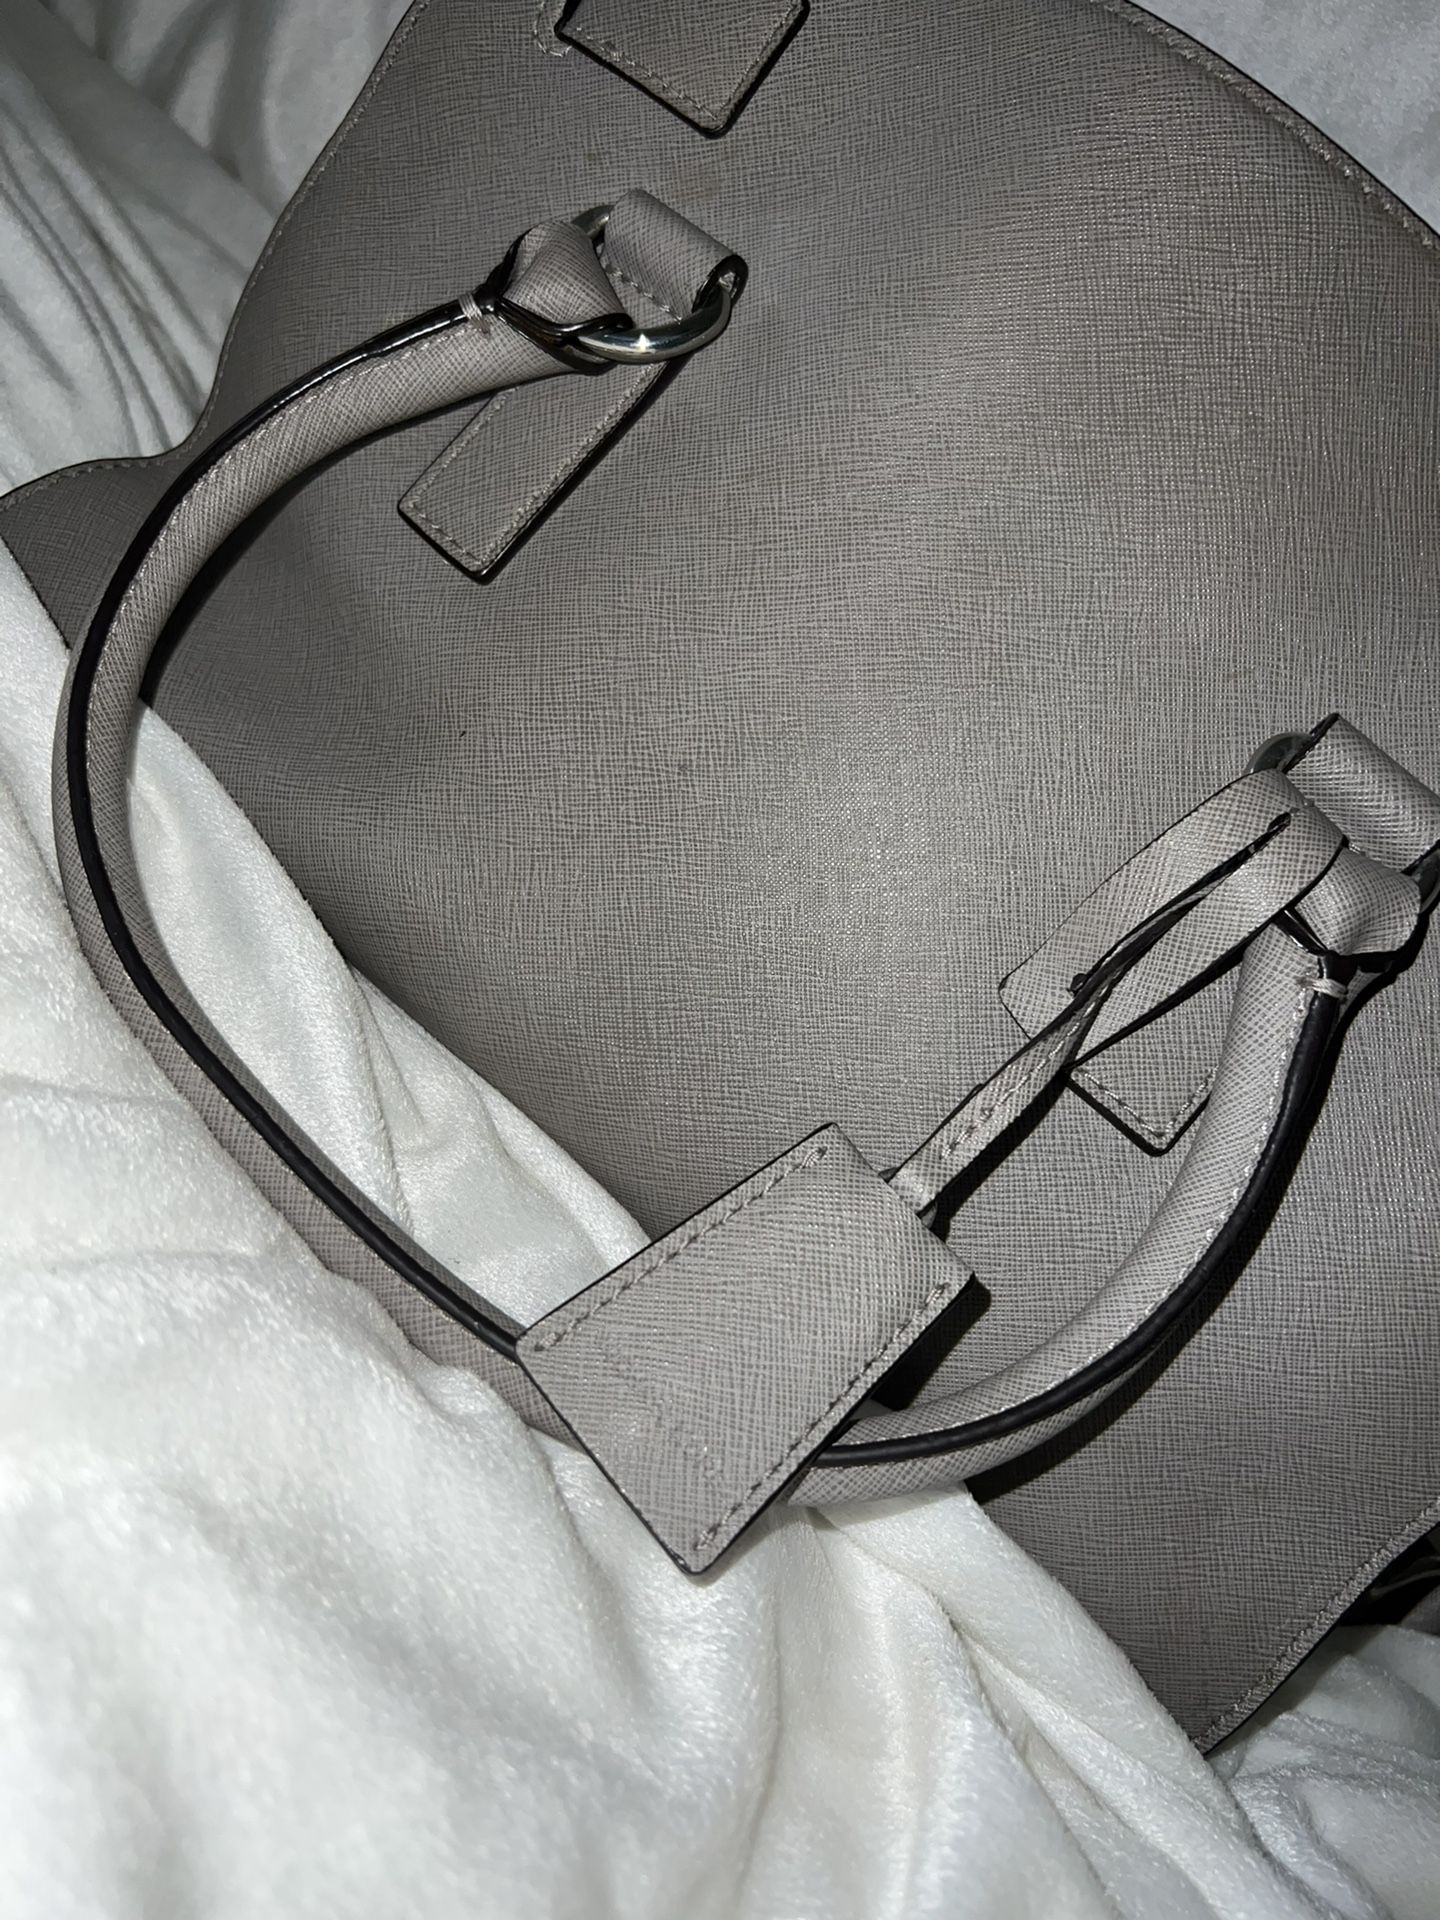 Michael Kors Saffiano Leather Handbag